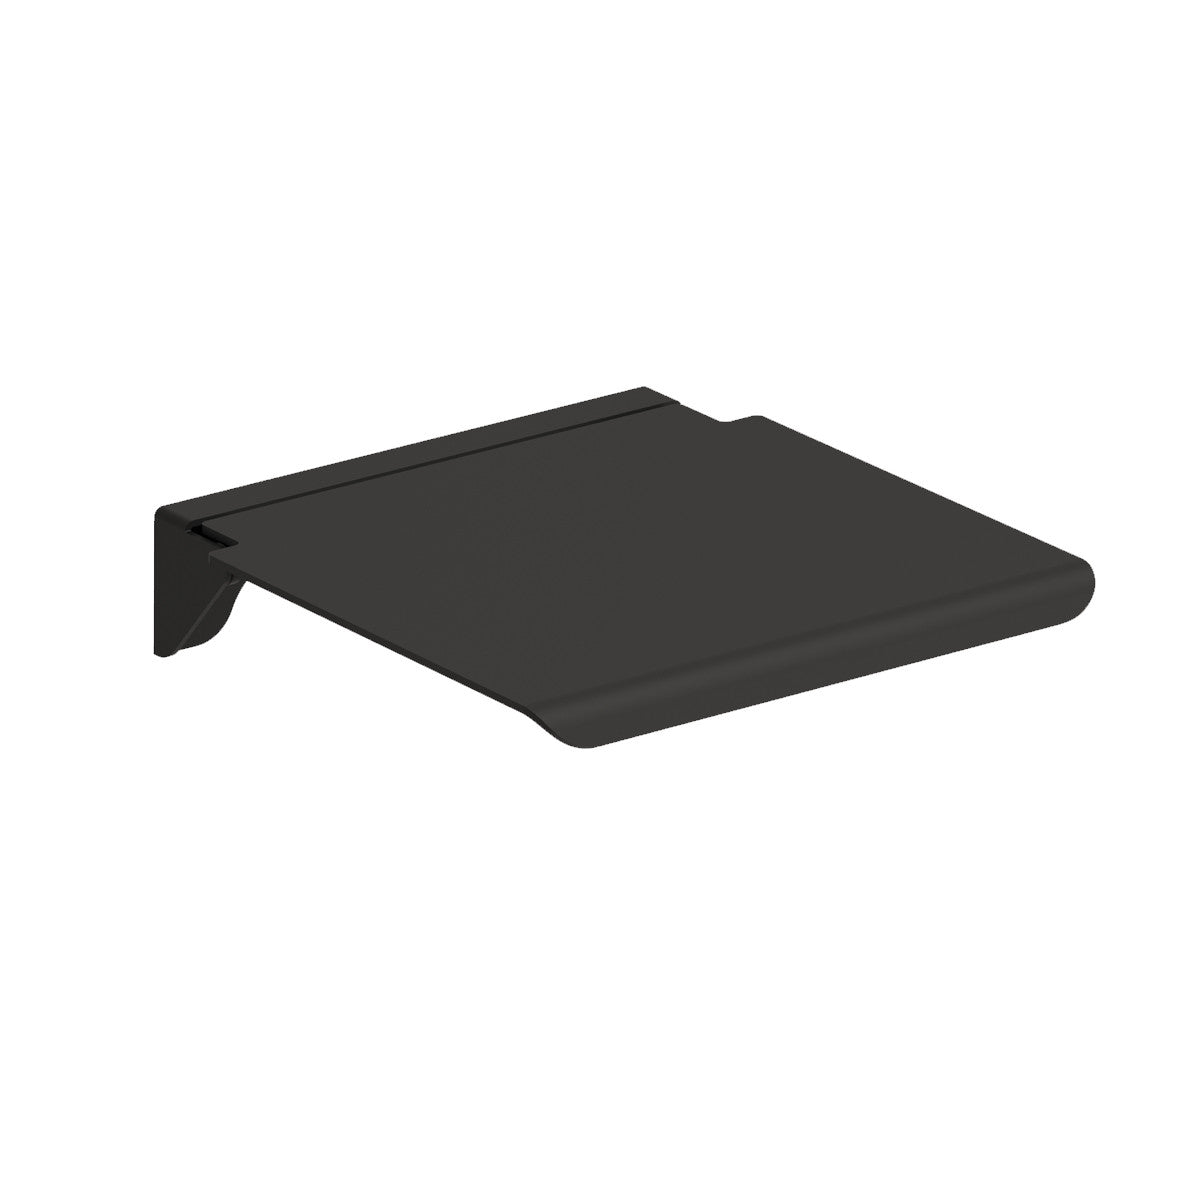 ADA Compliant Black Folding Shower Seat 16 x 14 Inches